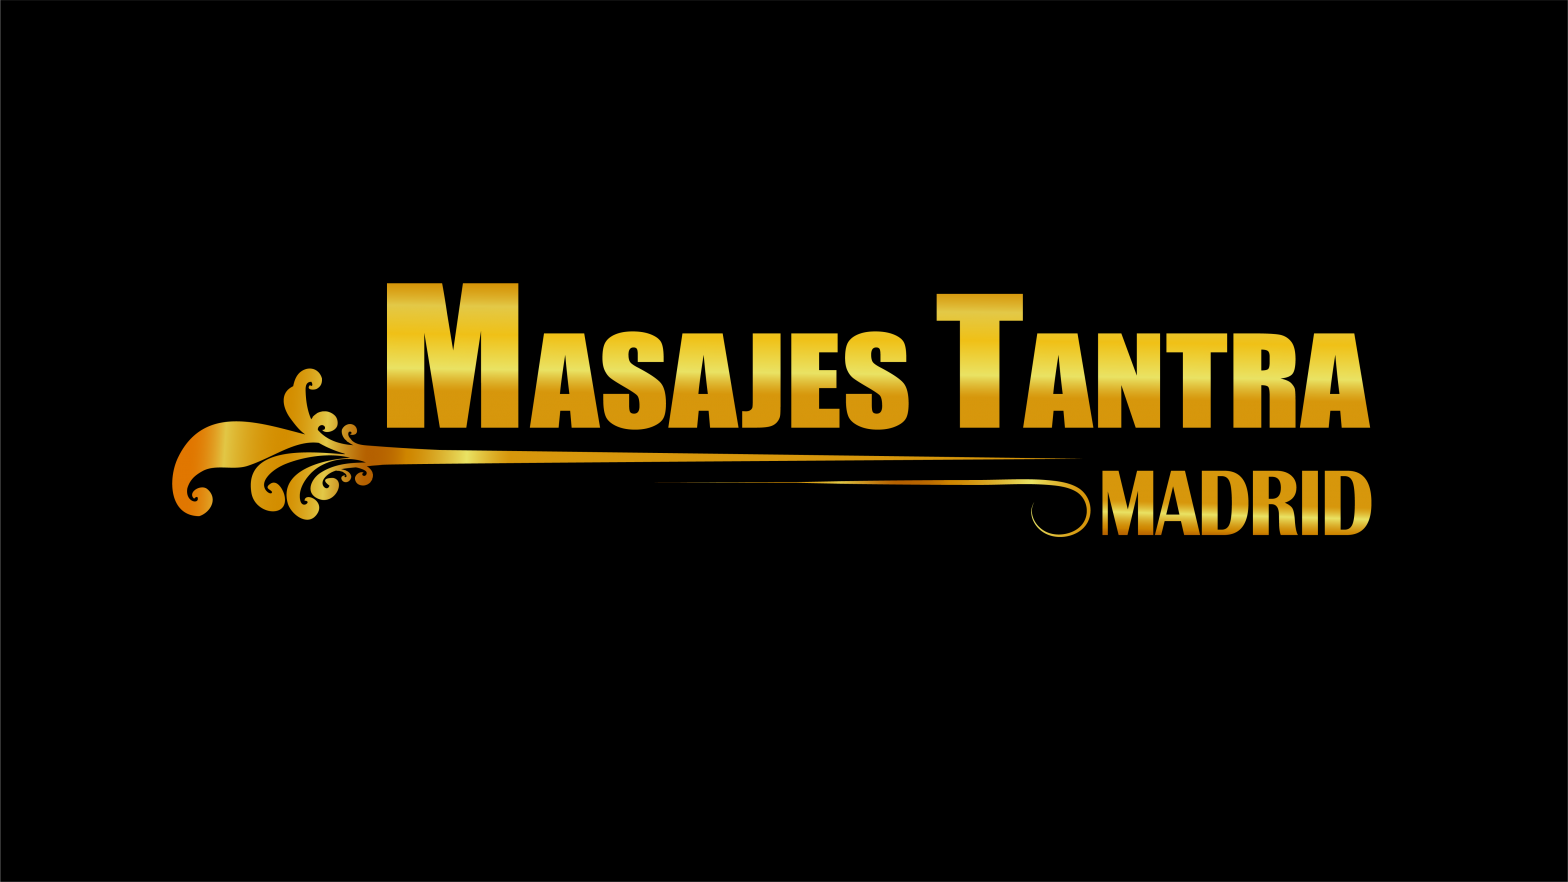 MASAJES TANTRA MADRID